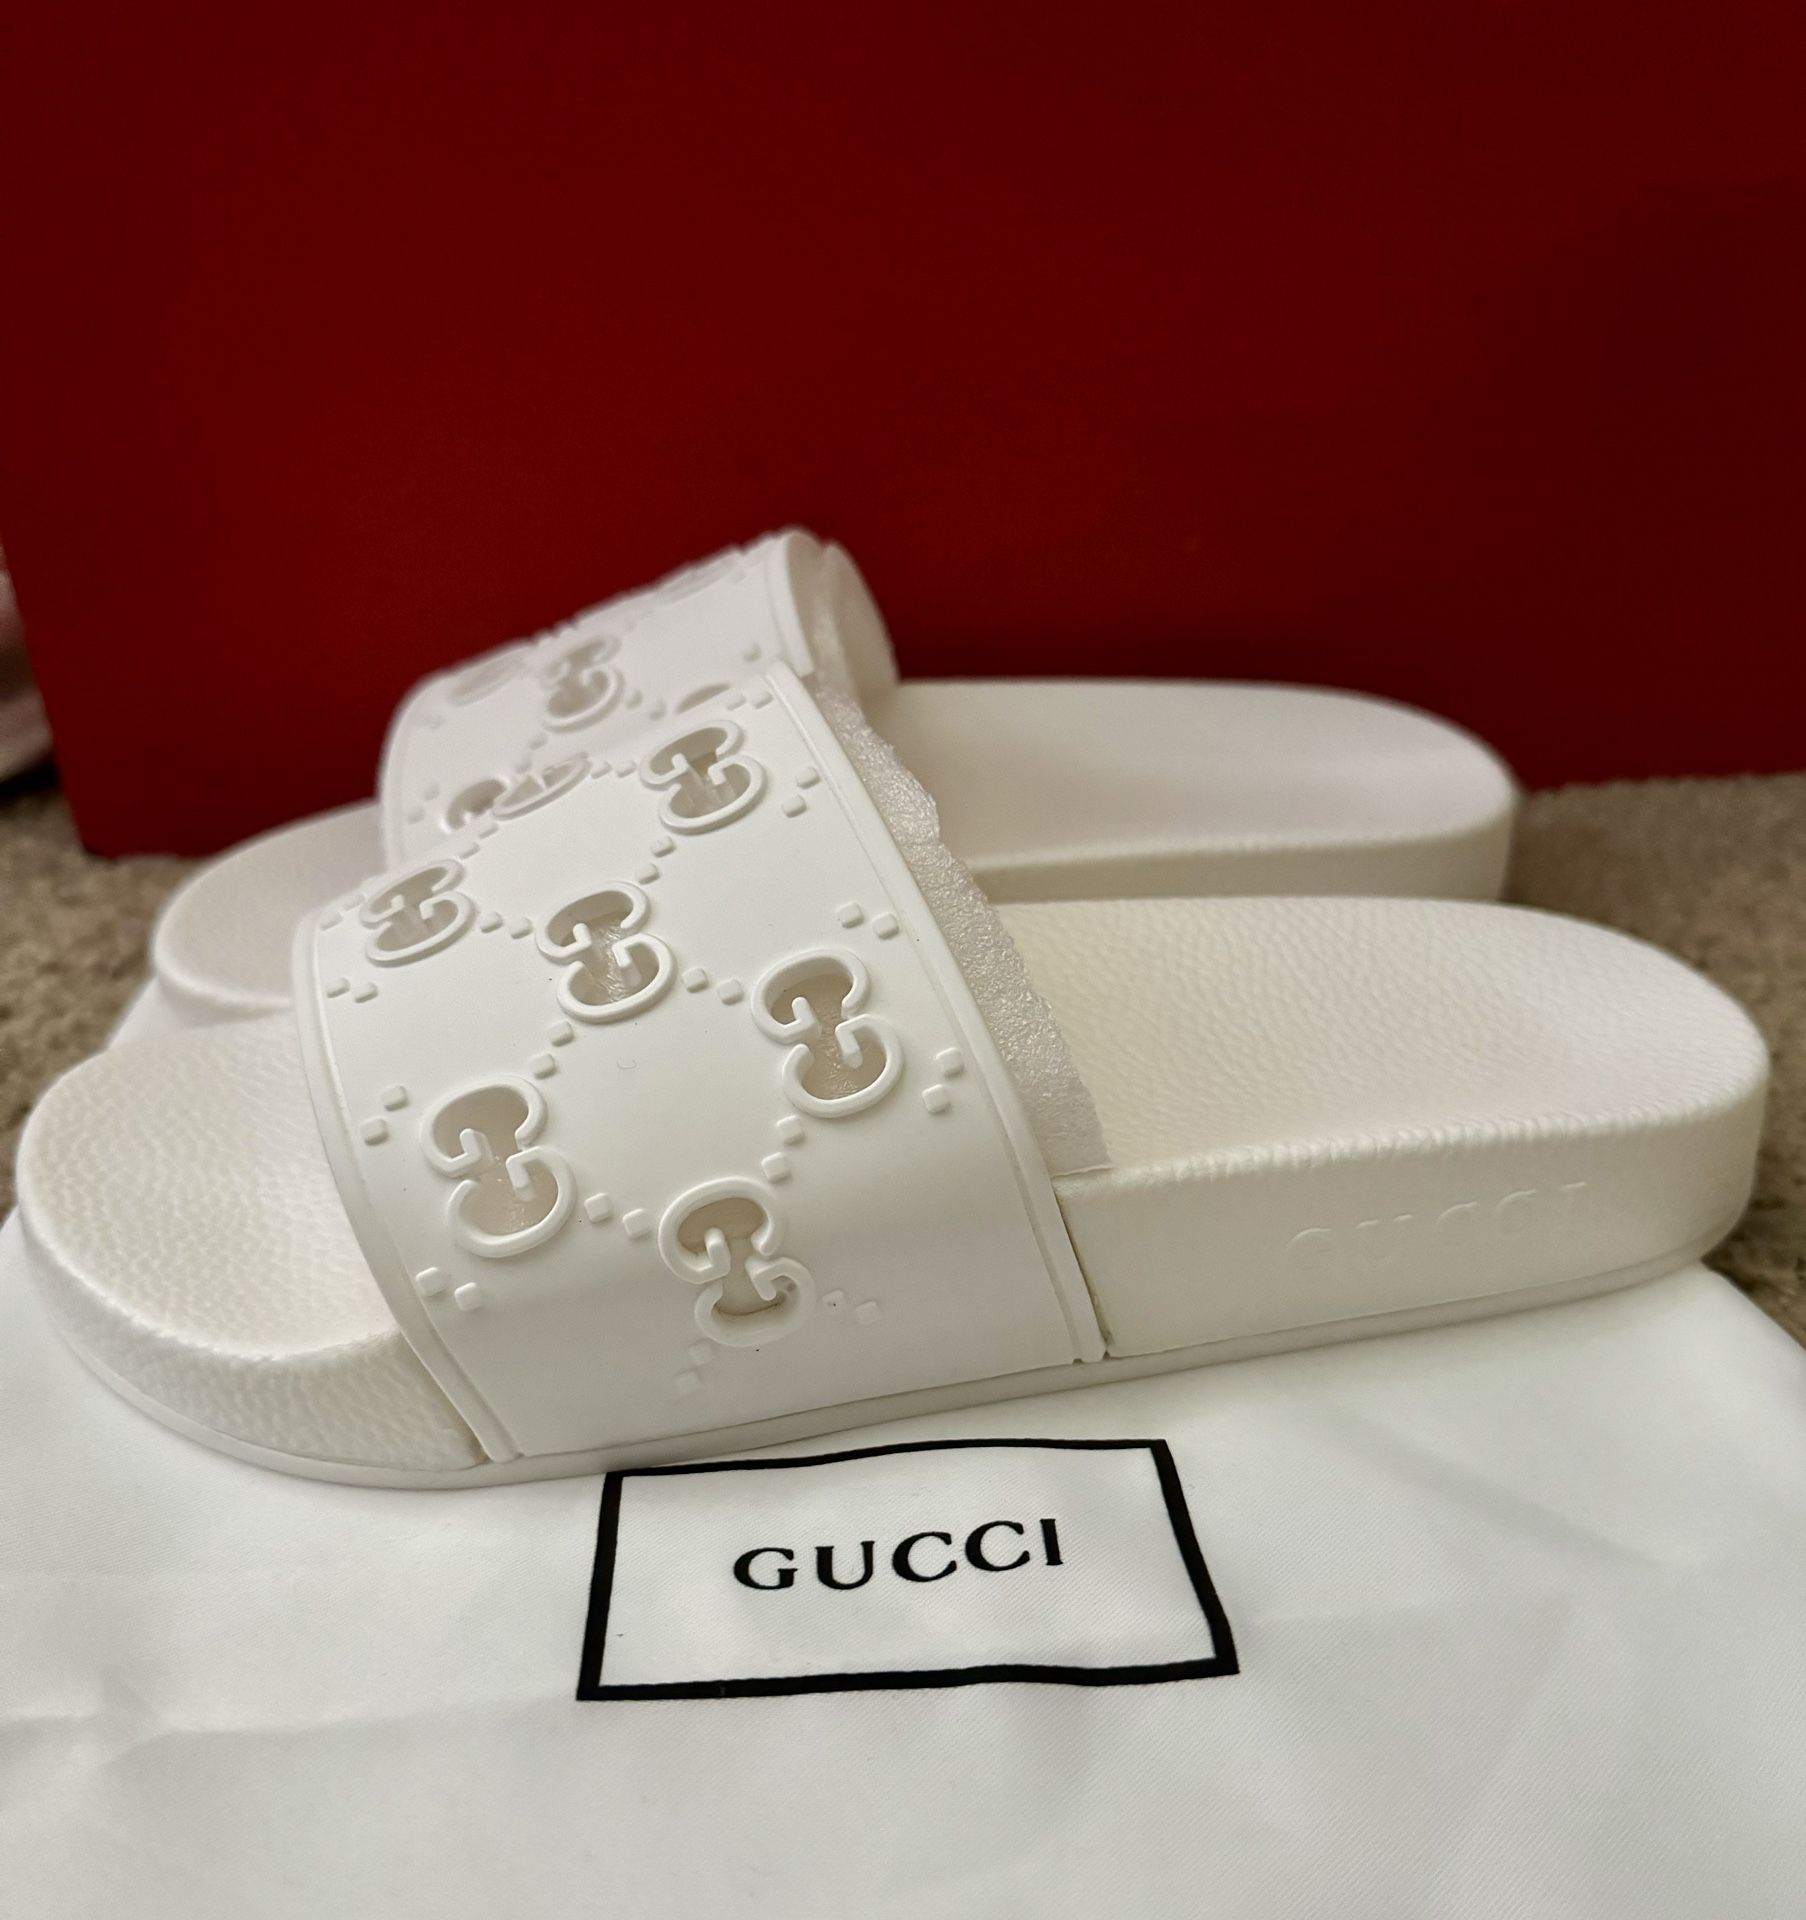 Women’s Gucci Slides Size 7